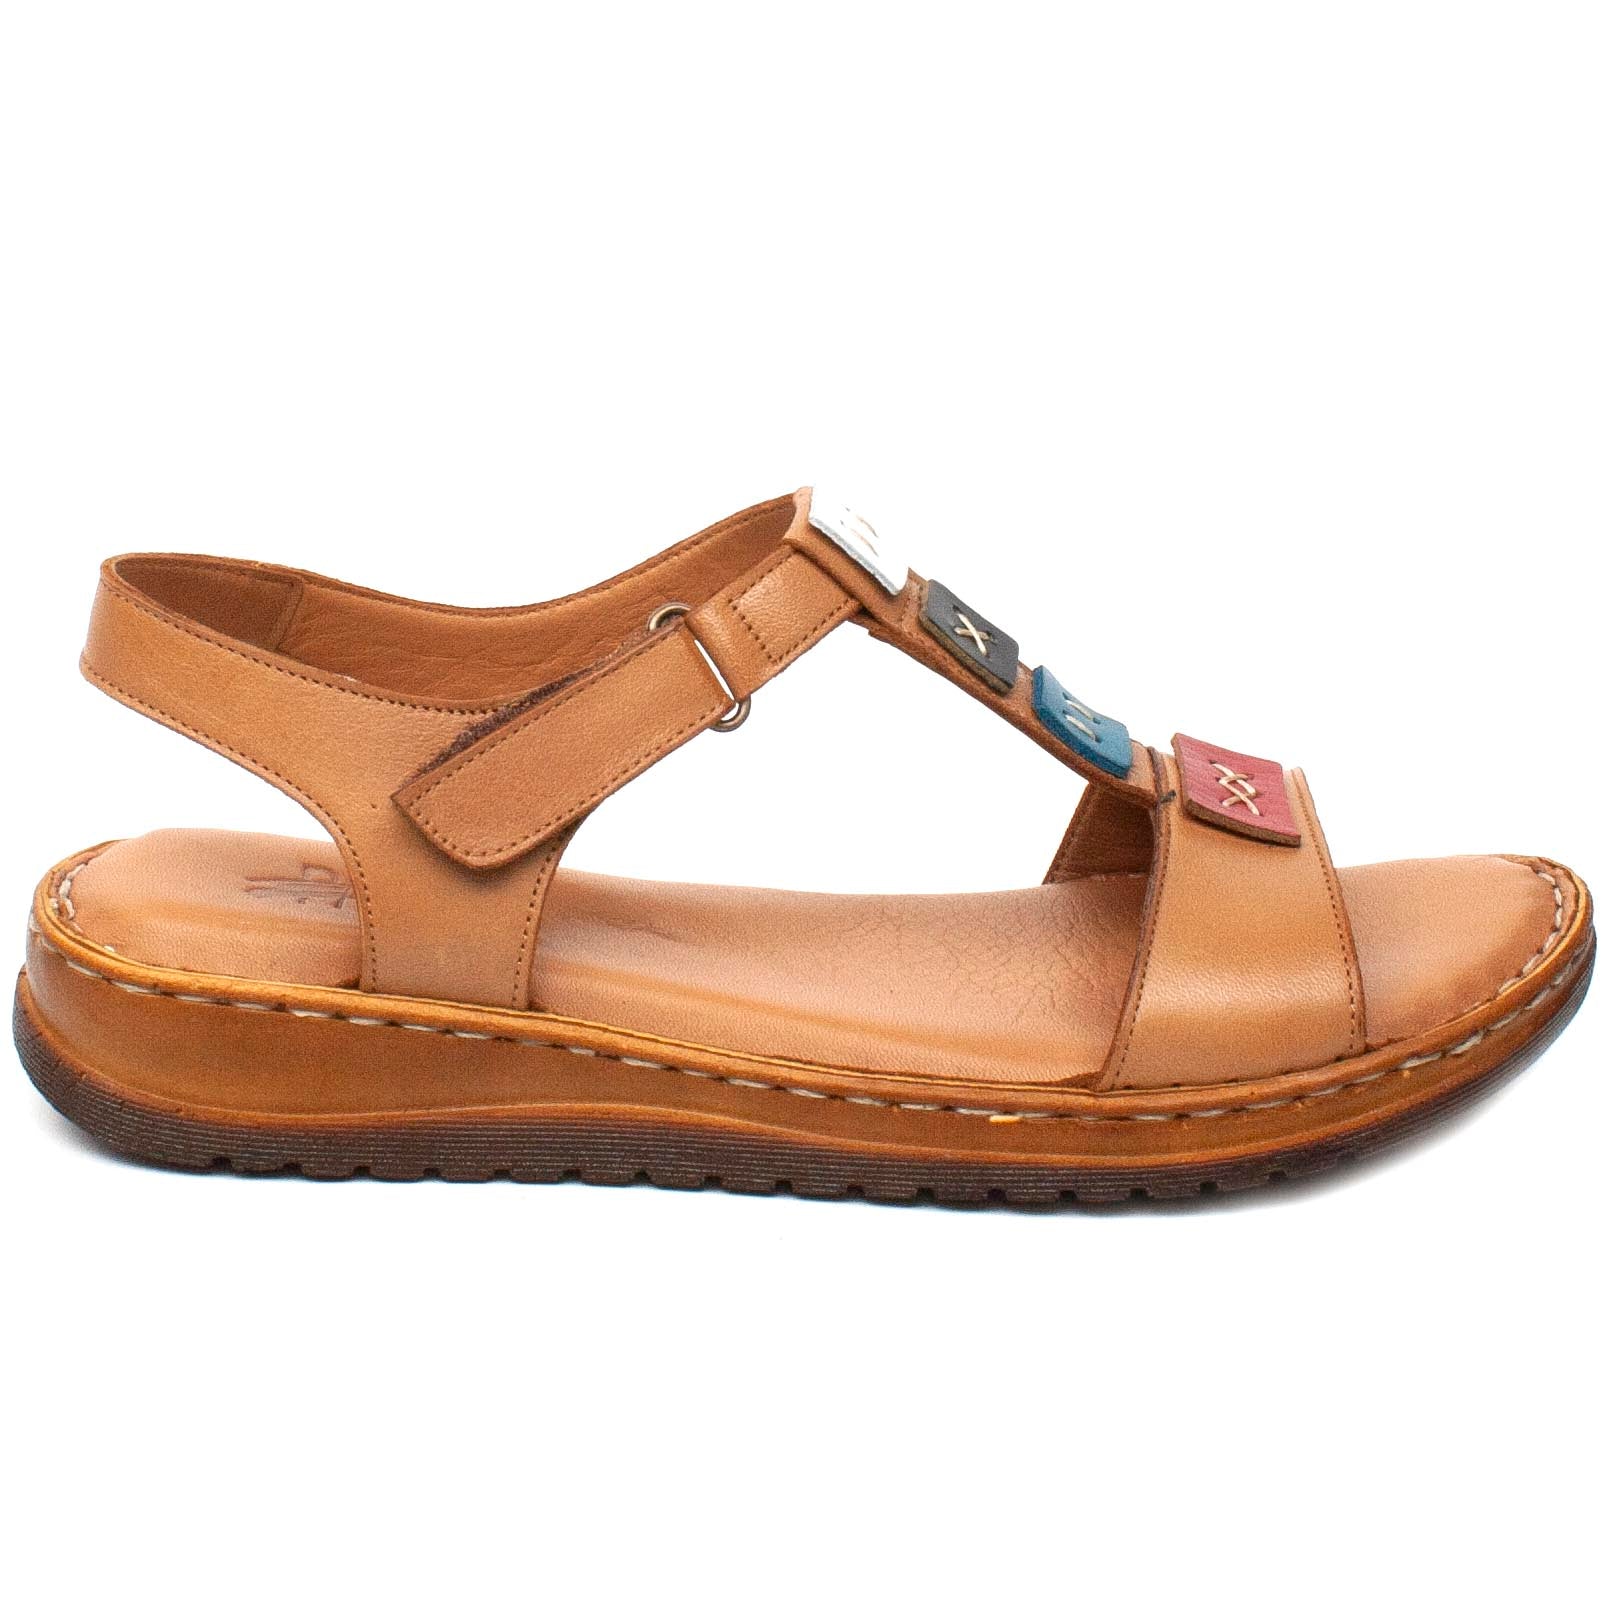 Pass Collection Sandale dama E24900 02 N maro ID2562-MARO